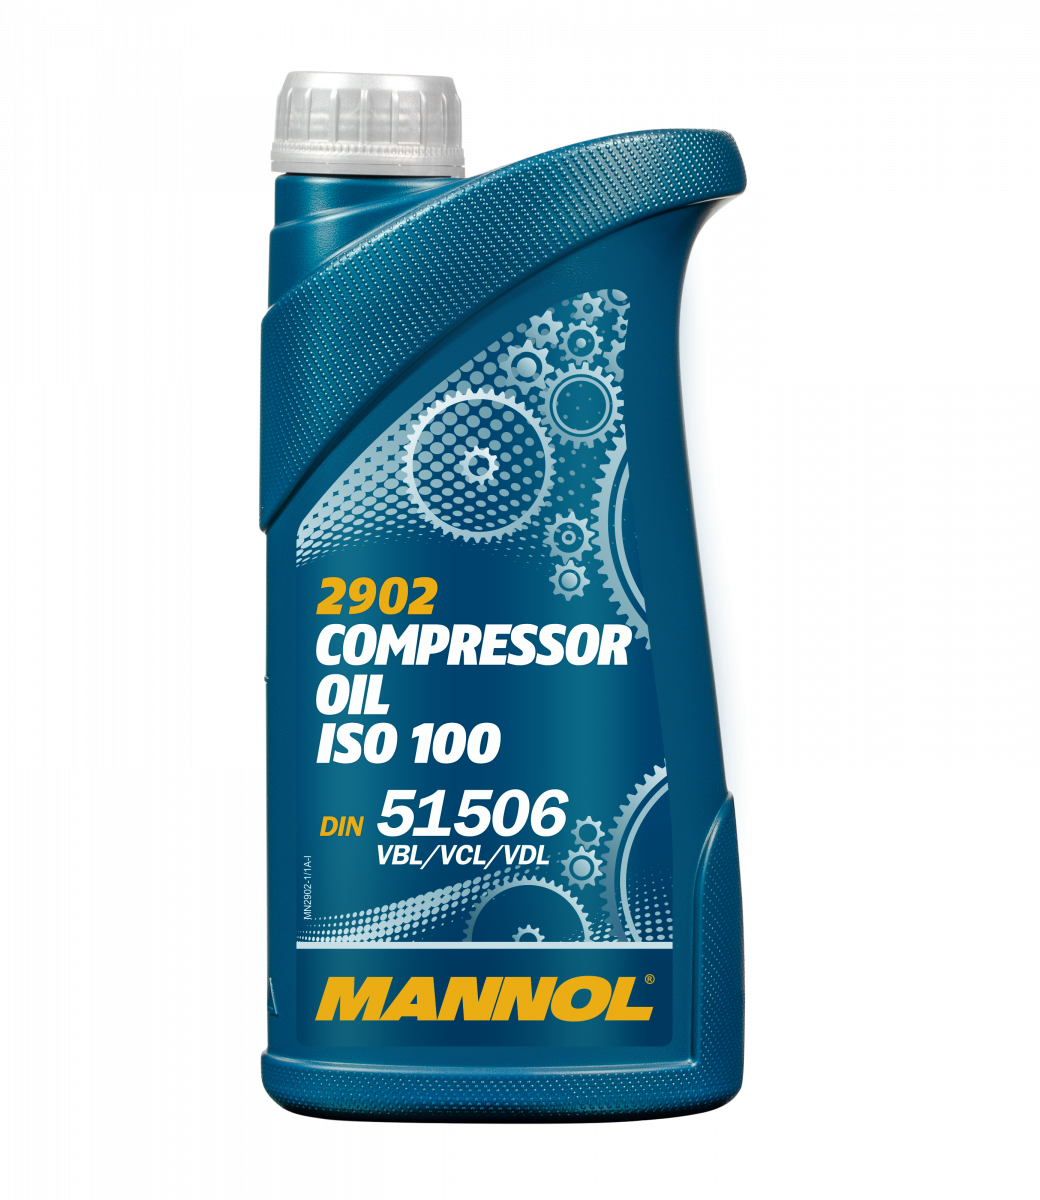 Mannol Compressor Oil ISO 100 (1L)